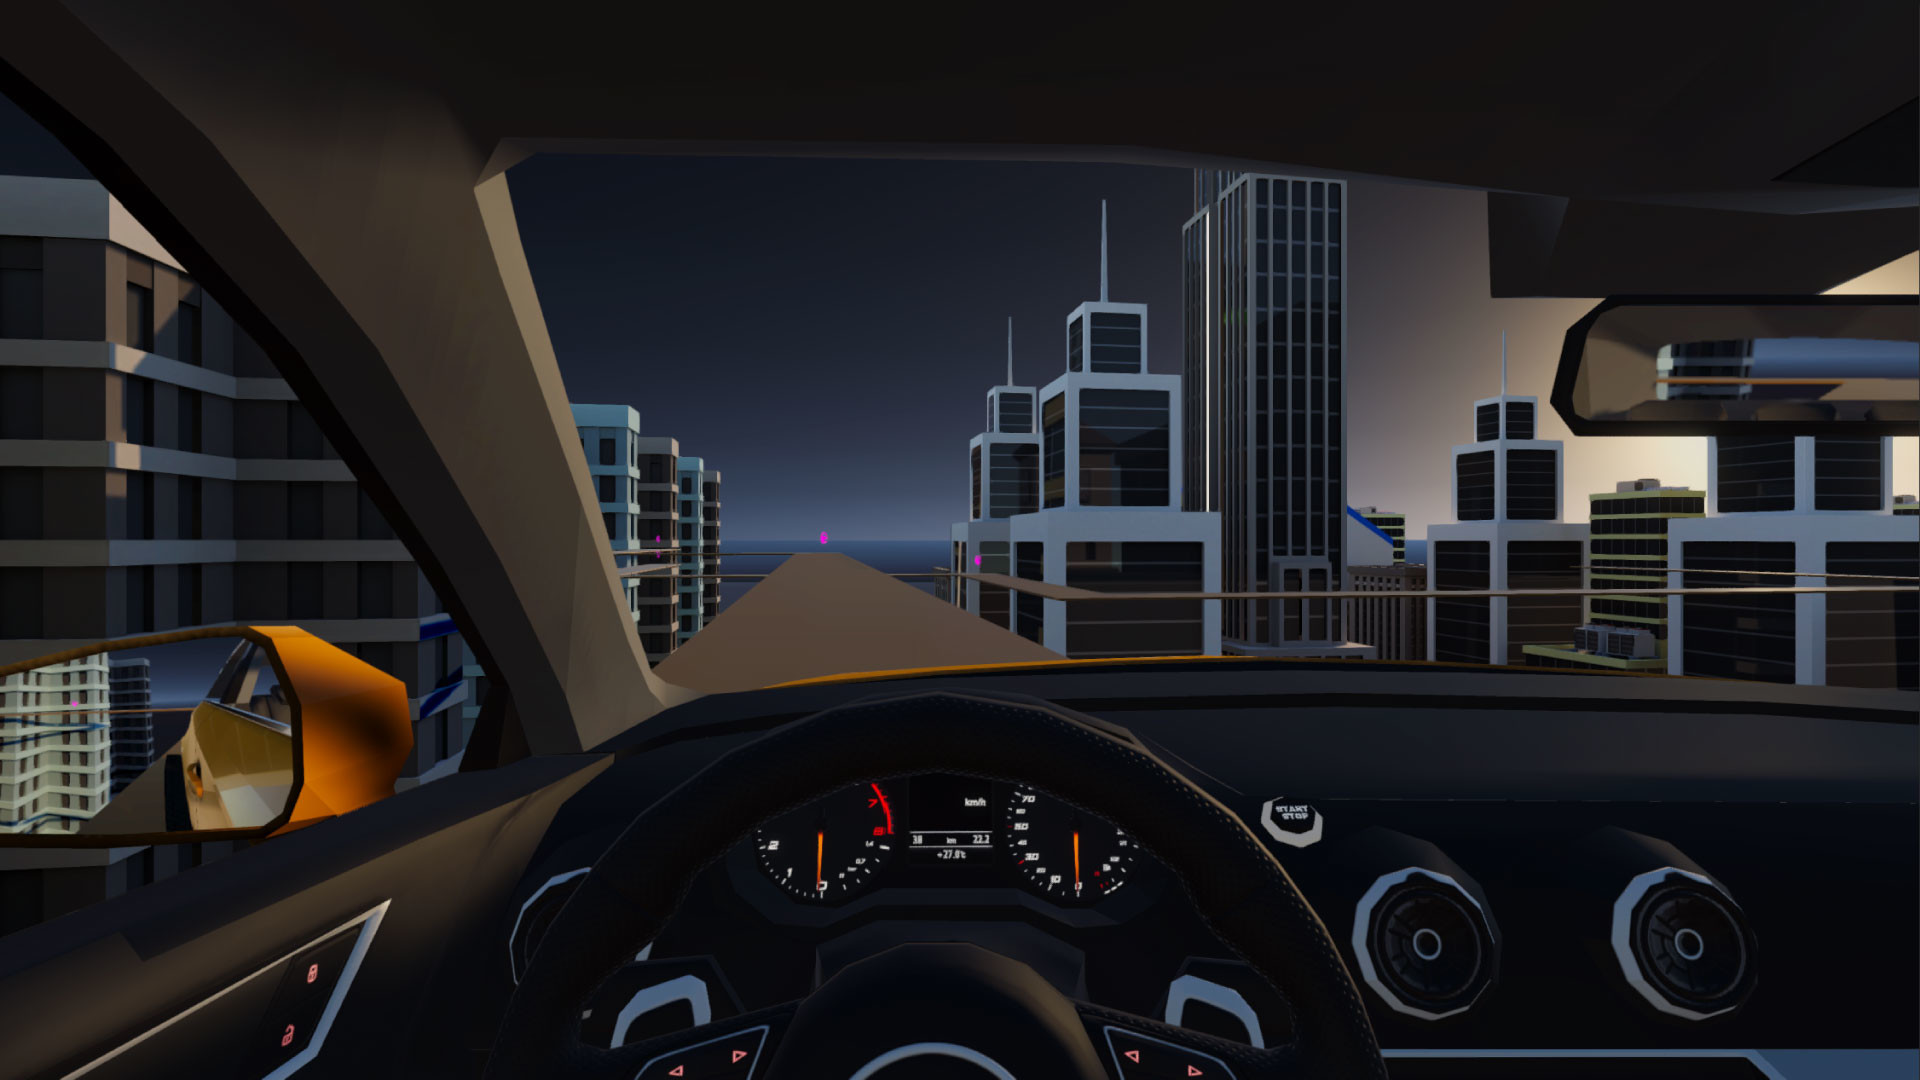 Download and Play Car Games: Parking Simulator Game on PC & Mac (Emulator)